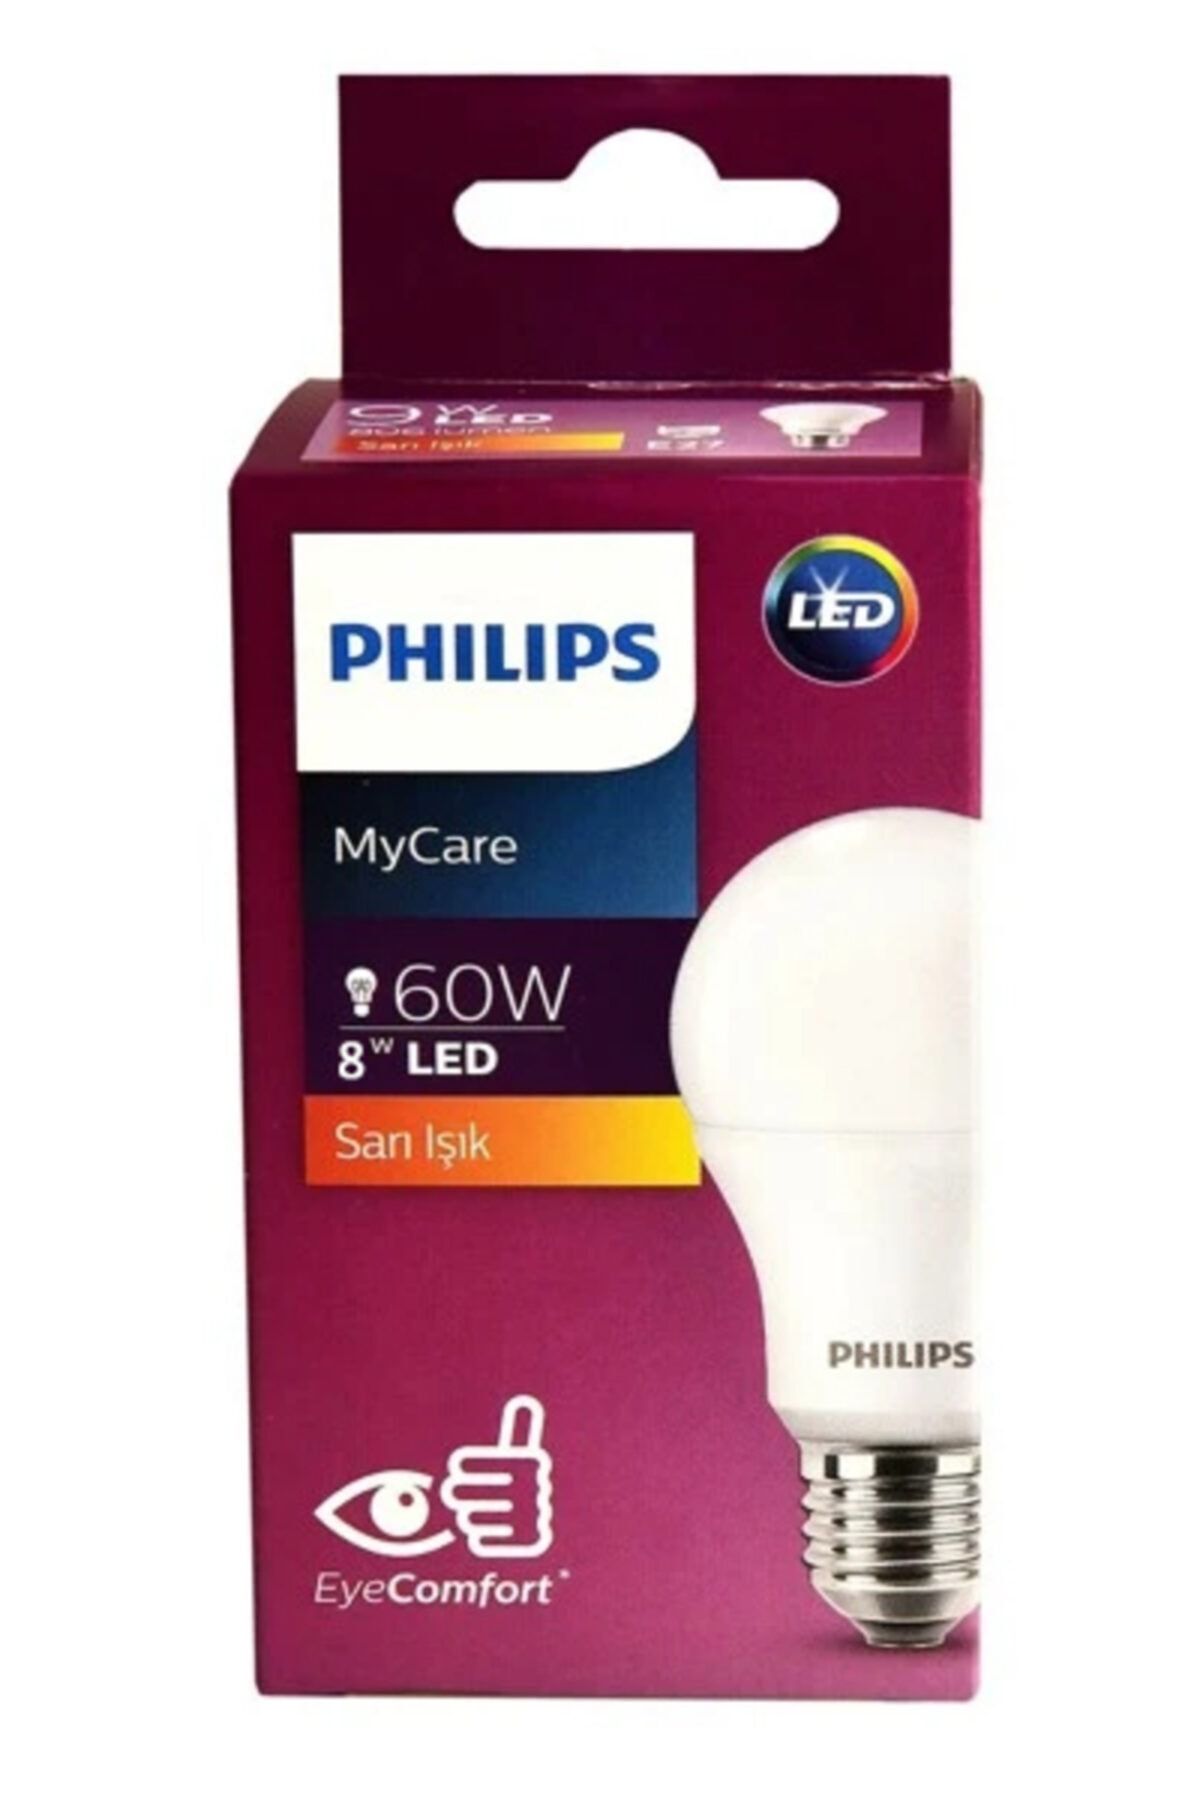 Филипс маркет. Philips led. Philips лампочка светодиодная Eye Comfort купить. Philips лампочка светодиодная 8w Eye Comfort купить.